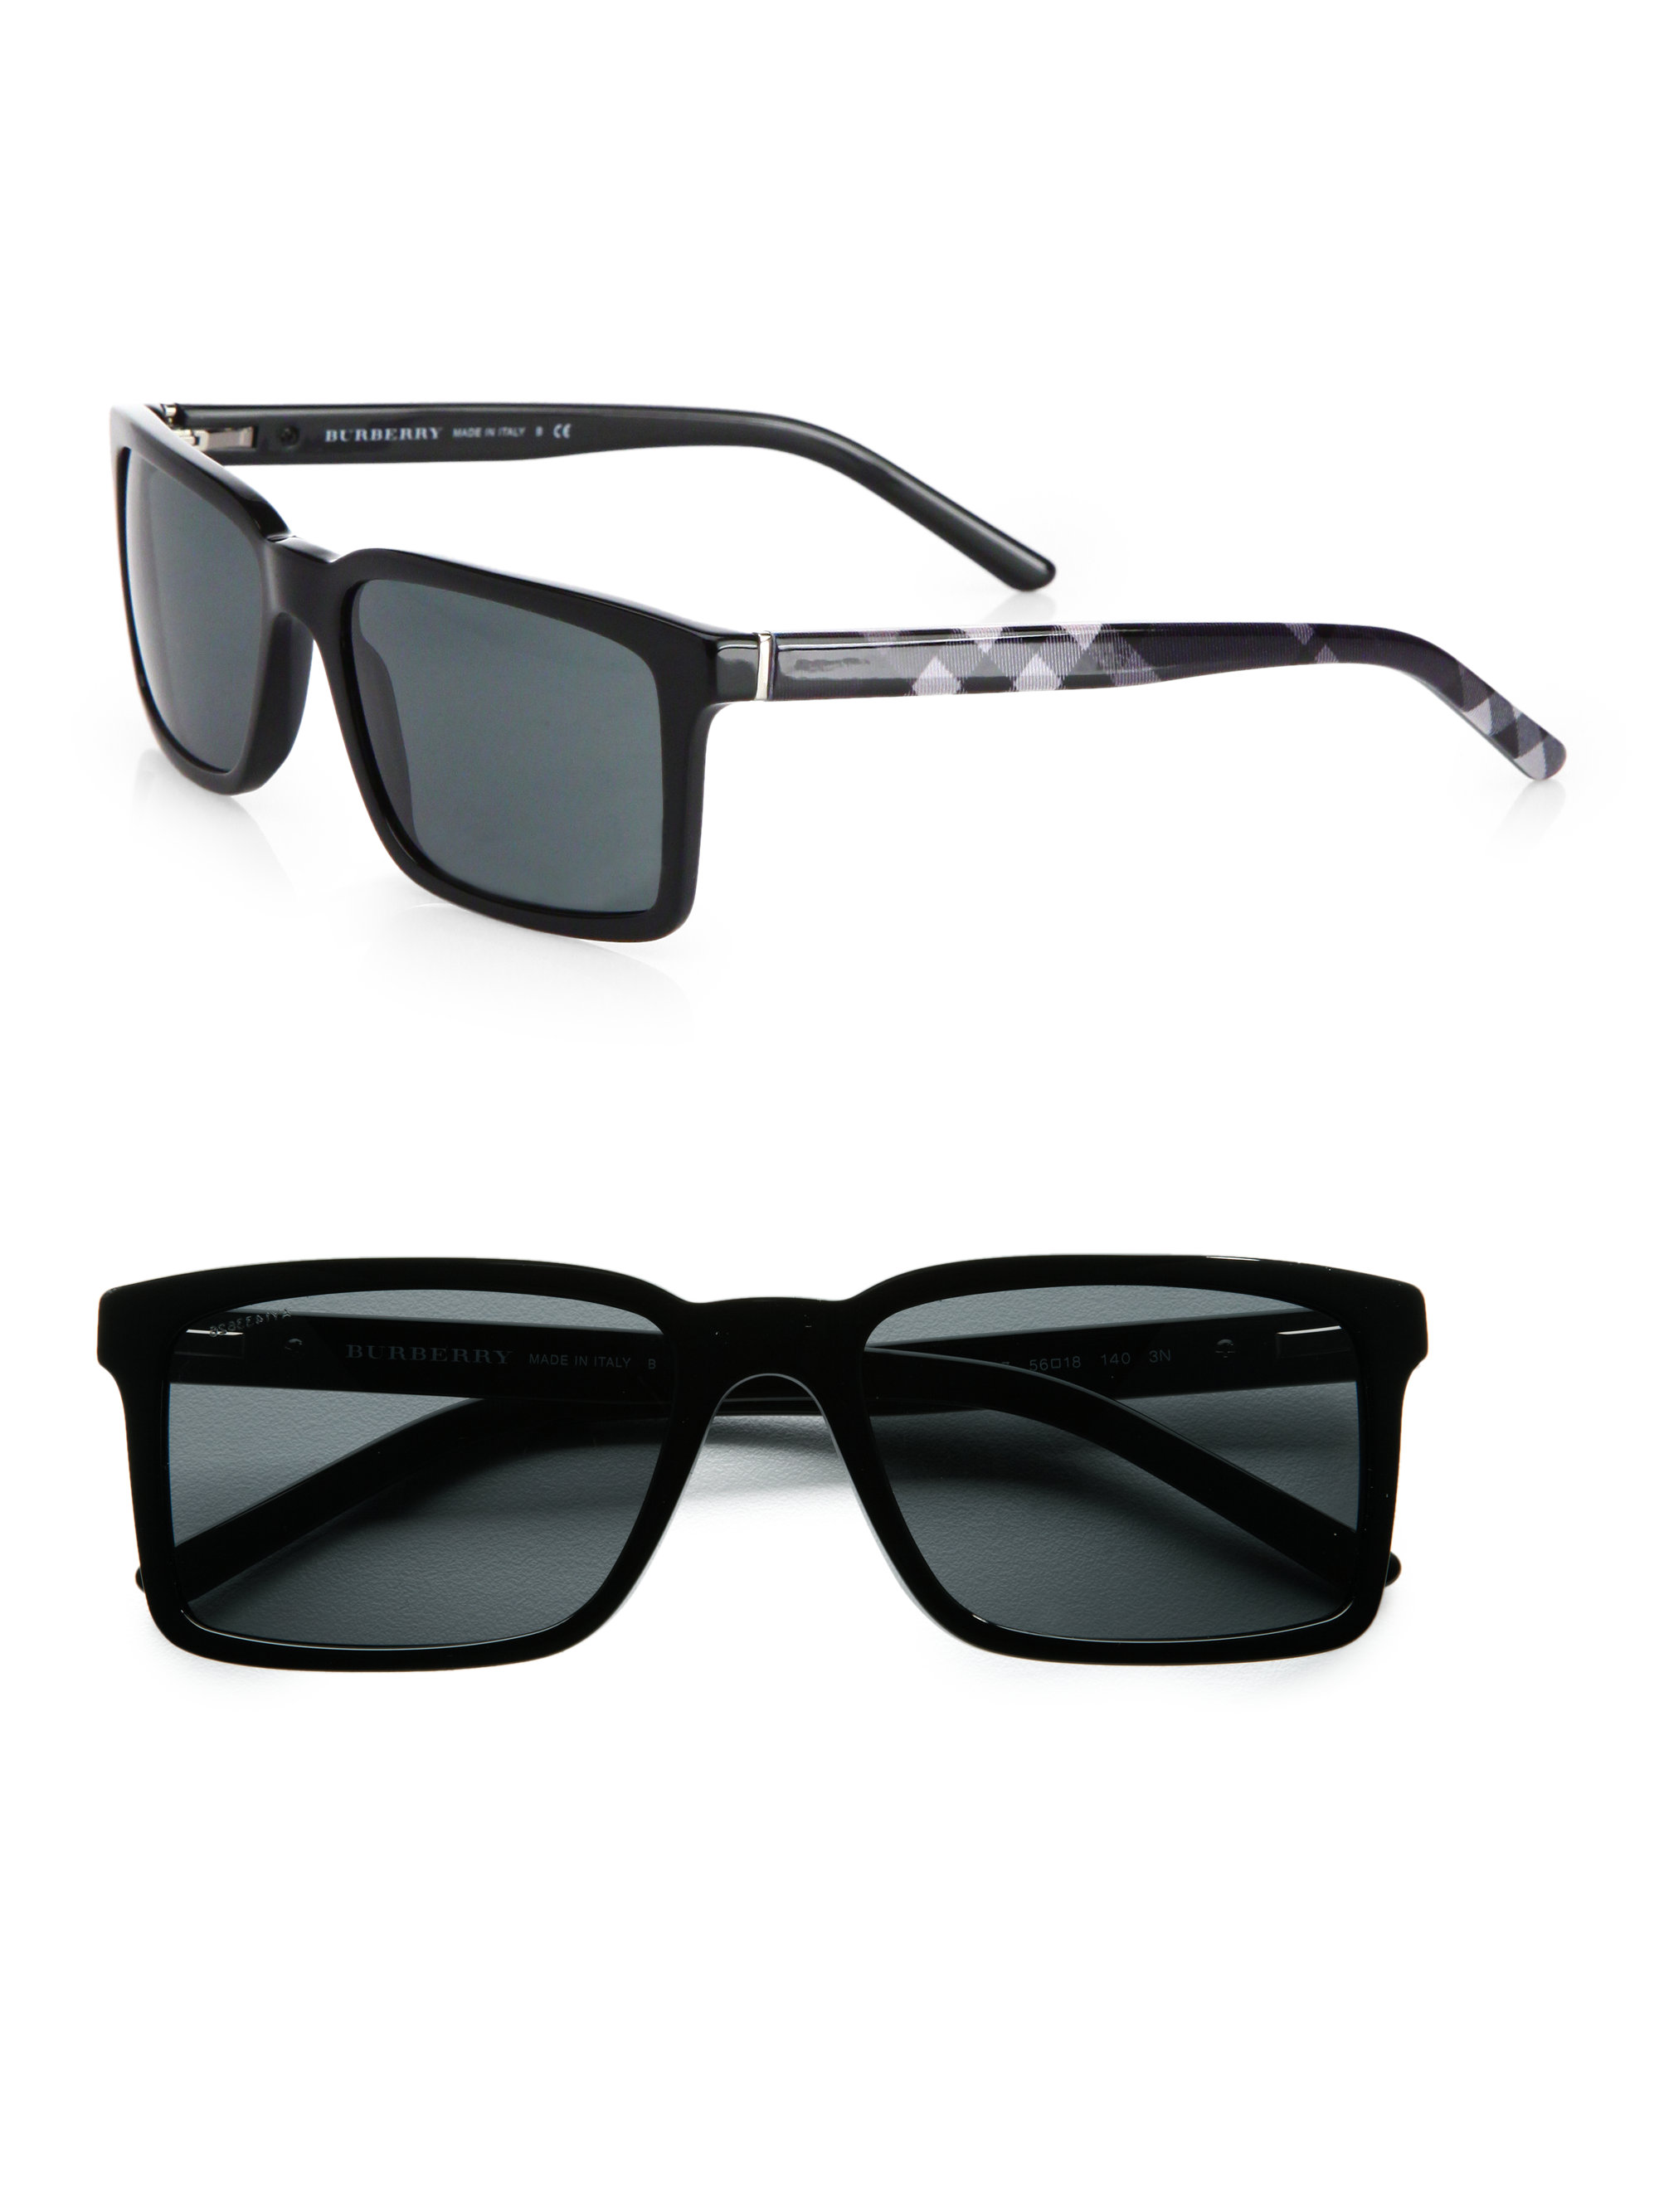 Lyst - Burberry Metal Aviator Sunglasses in Black for Men